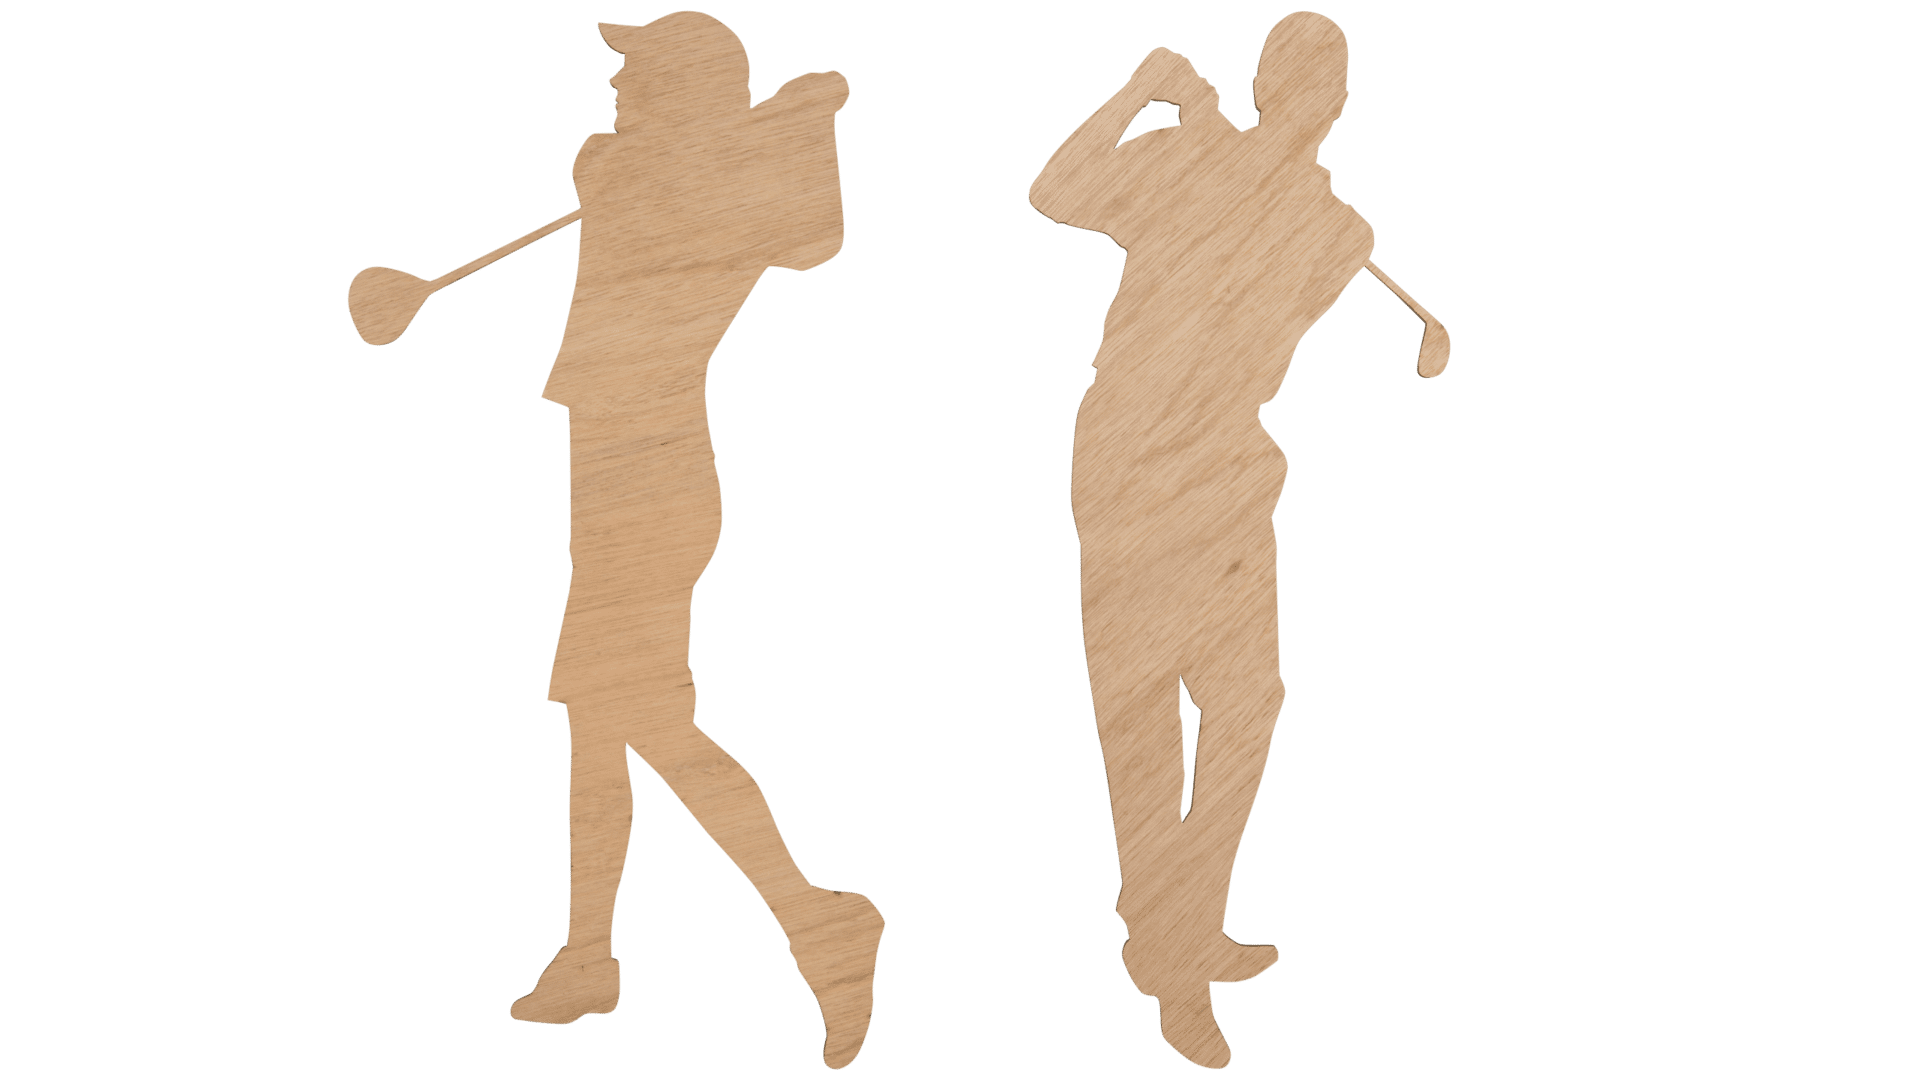 Lady golfer and gentleman golfer